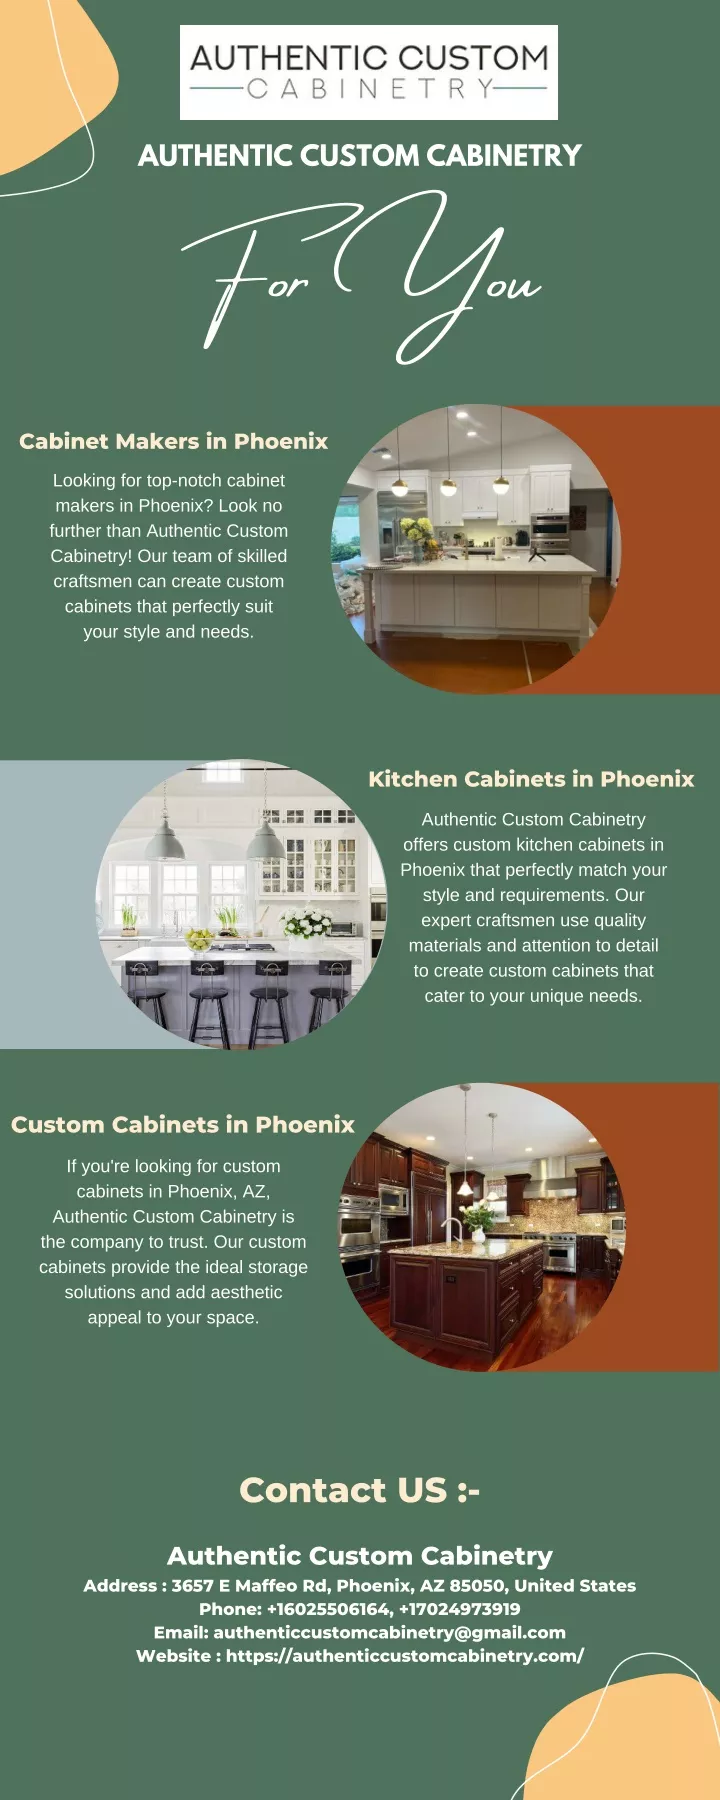 authentic custom cabinetry